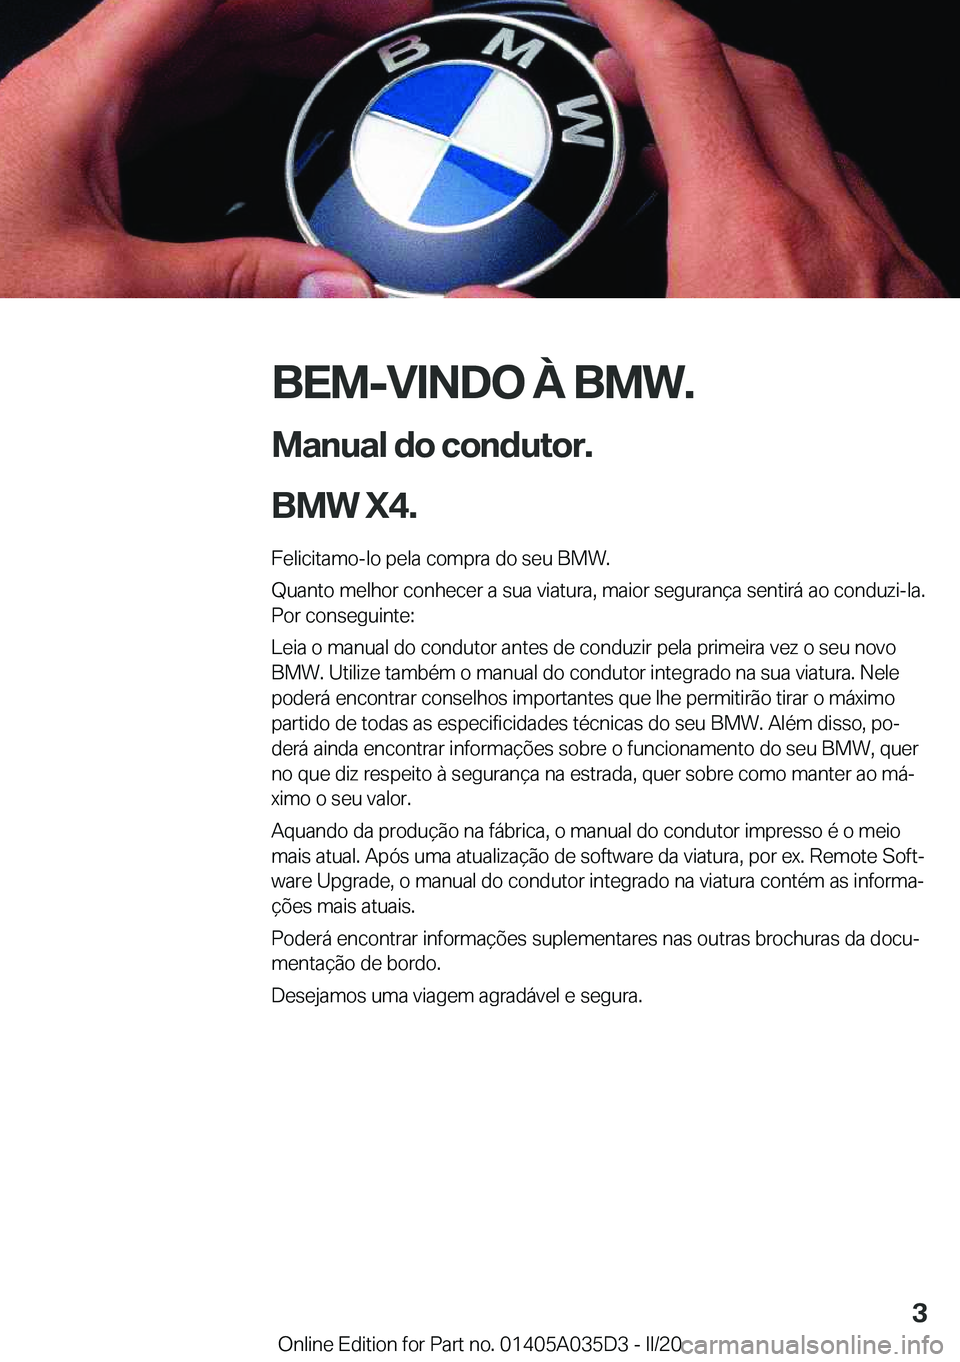 BMW X4 2020  Manual do condutor (in Portuguese) �B�E�M�-�V�I�N�D�O��À��B�M�W�.
�M�a�n�u�a�l��d�o��c�o�n�d�u�t�o�r�.
�B�M�W��X�4�. �F�e�l�i�c�i�t�a�m�o�-�l�o��p�e�l�a��c�o�m�p�r�a��d�o��s�e�u��B�M�W�.
�Q�u�a�n�t�o��m�e�l�h�o�r��c�o�n�h�